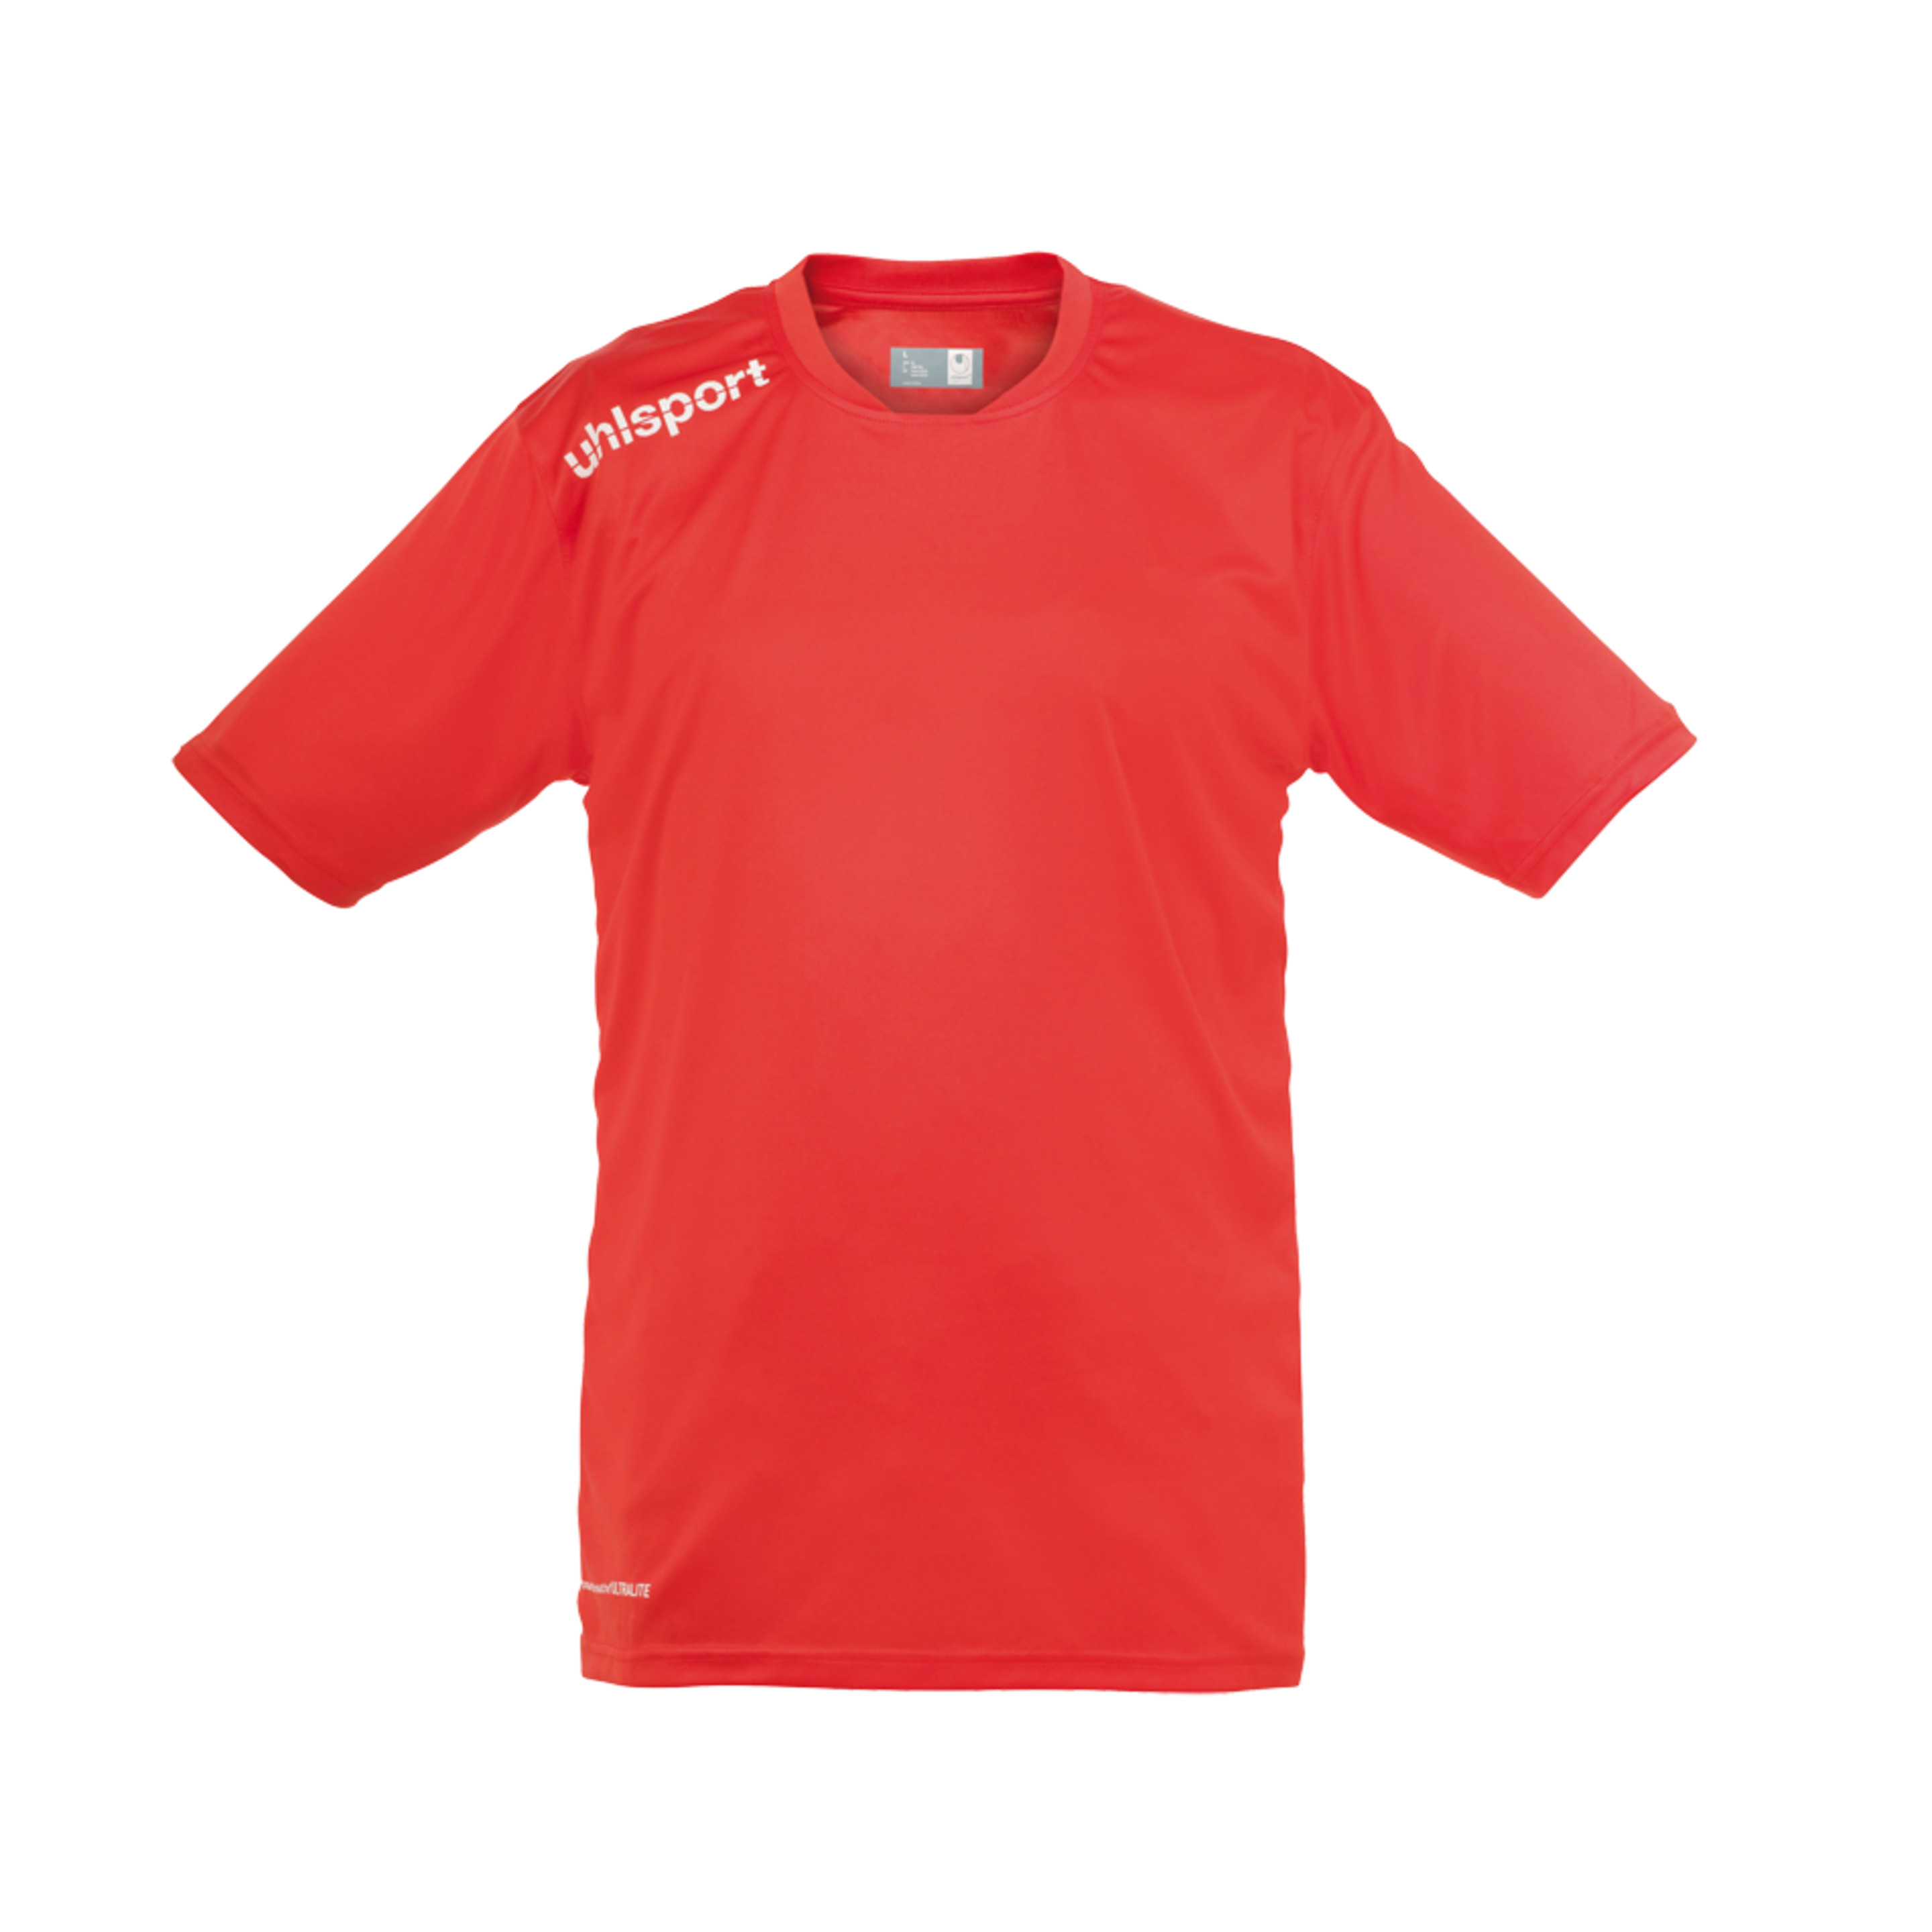 Essential Pes Camiseta De Entrenamiento Rojo Uhlsport - rojo - 